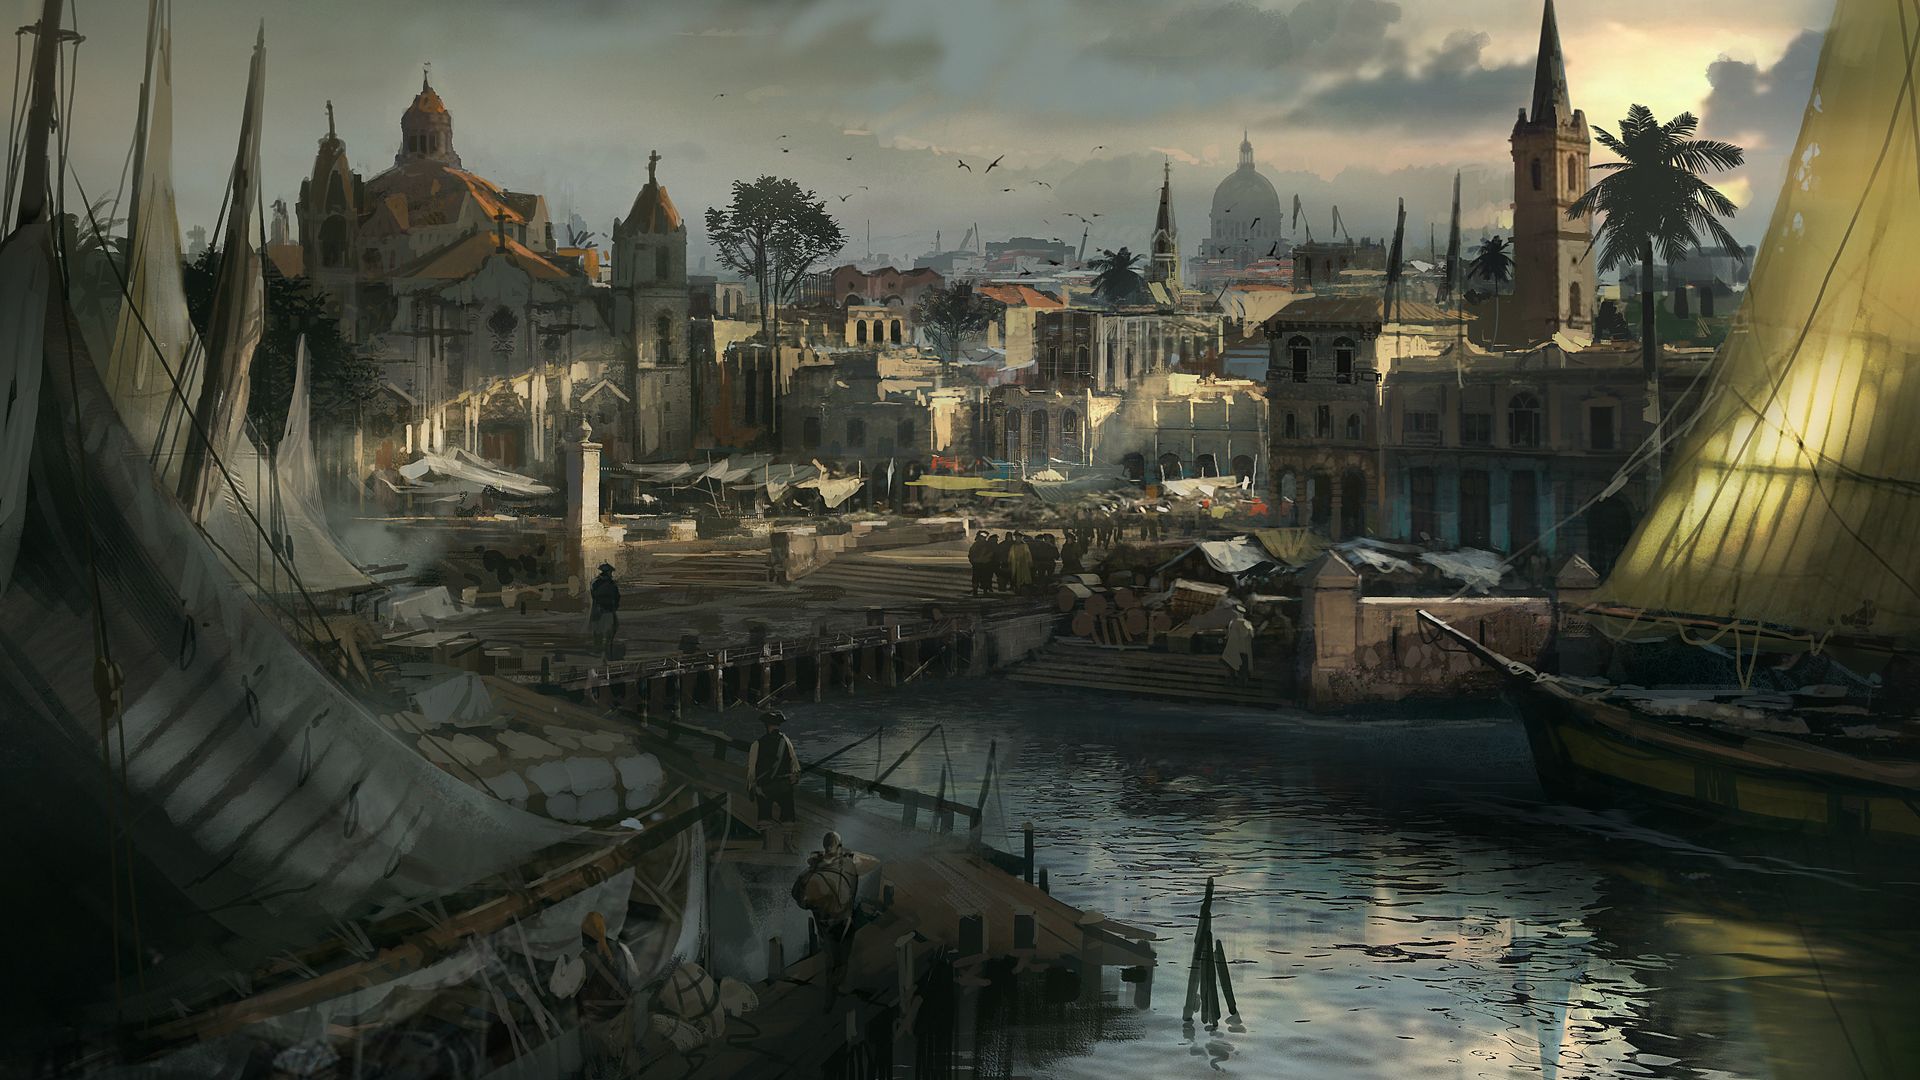 Descarga gratuita de fondo de pantalla para móvil de Assassin's Creed Iv: Black Flag, Assassin's Creed, Videojuego.